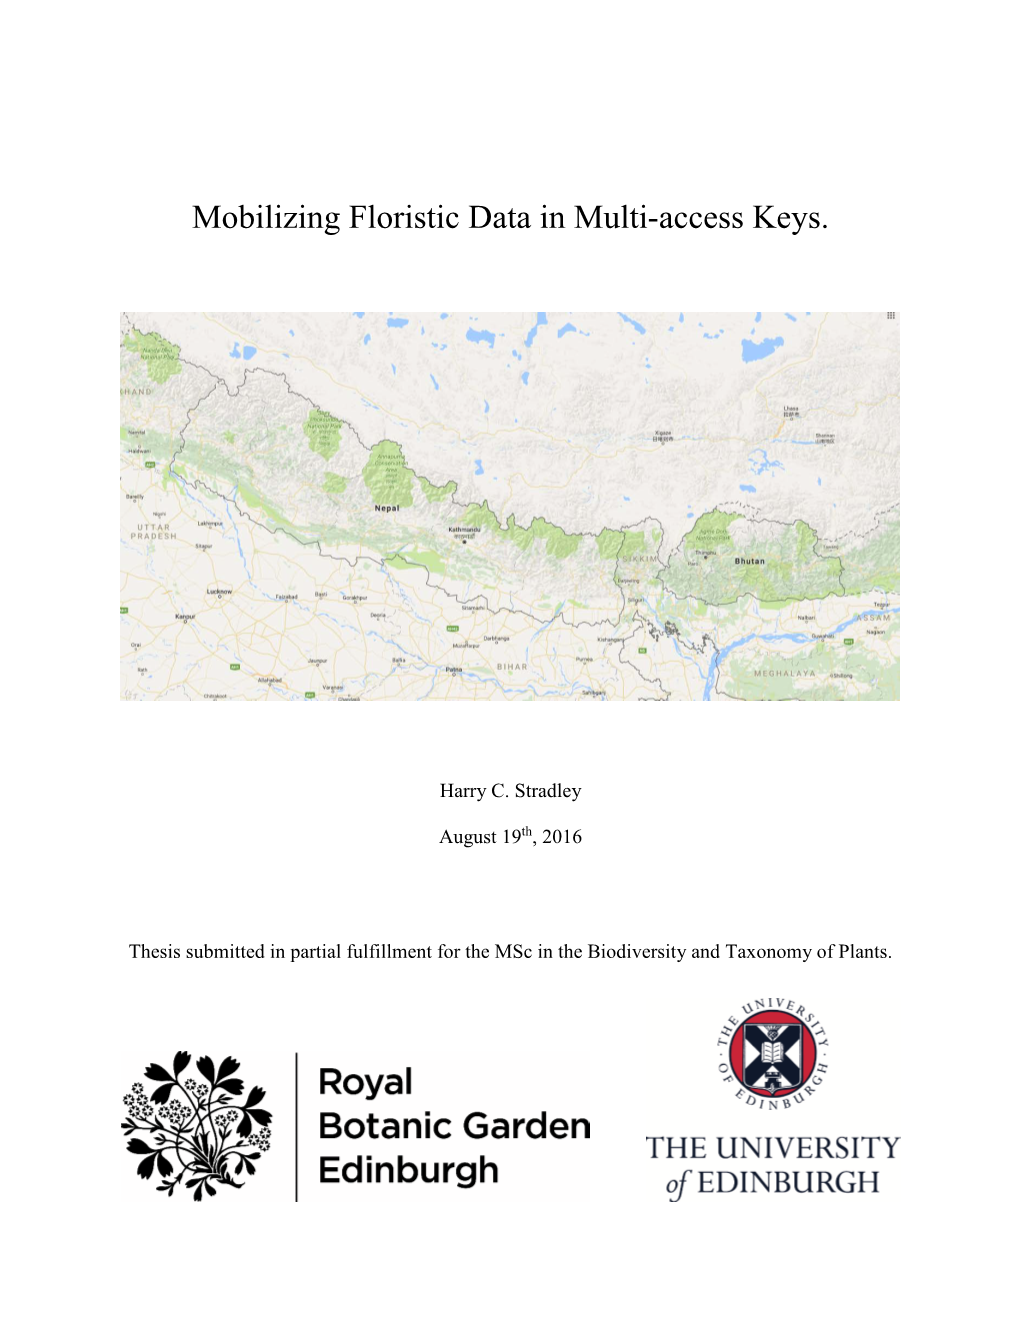 Mobilizing Floristic Data in Multi-Access Keys